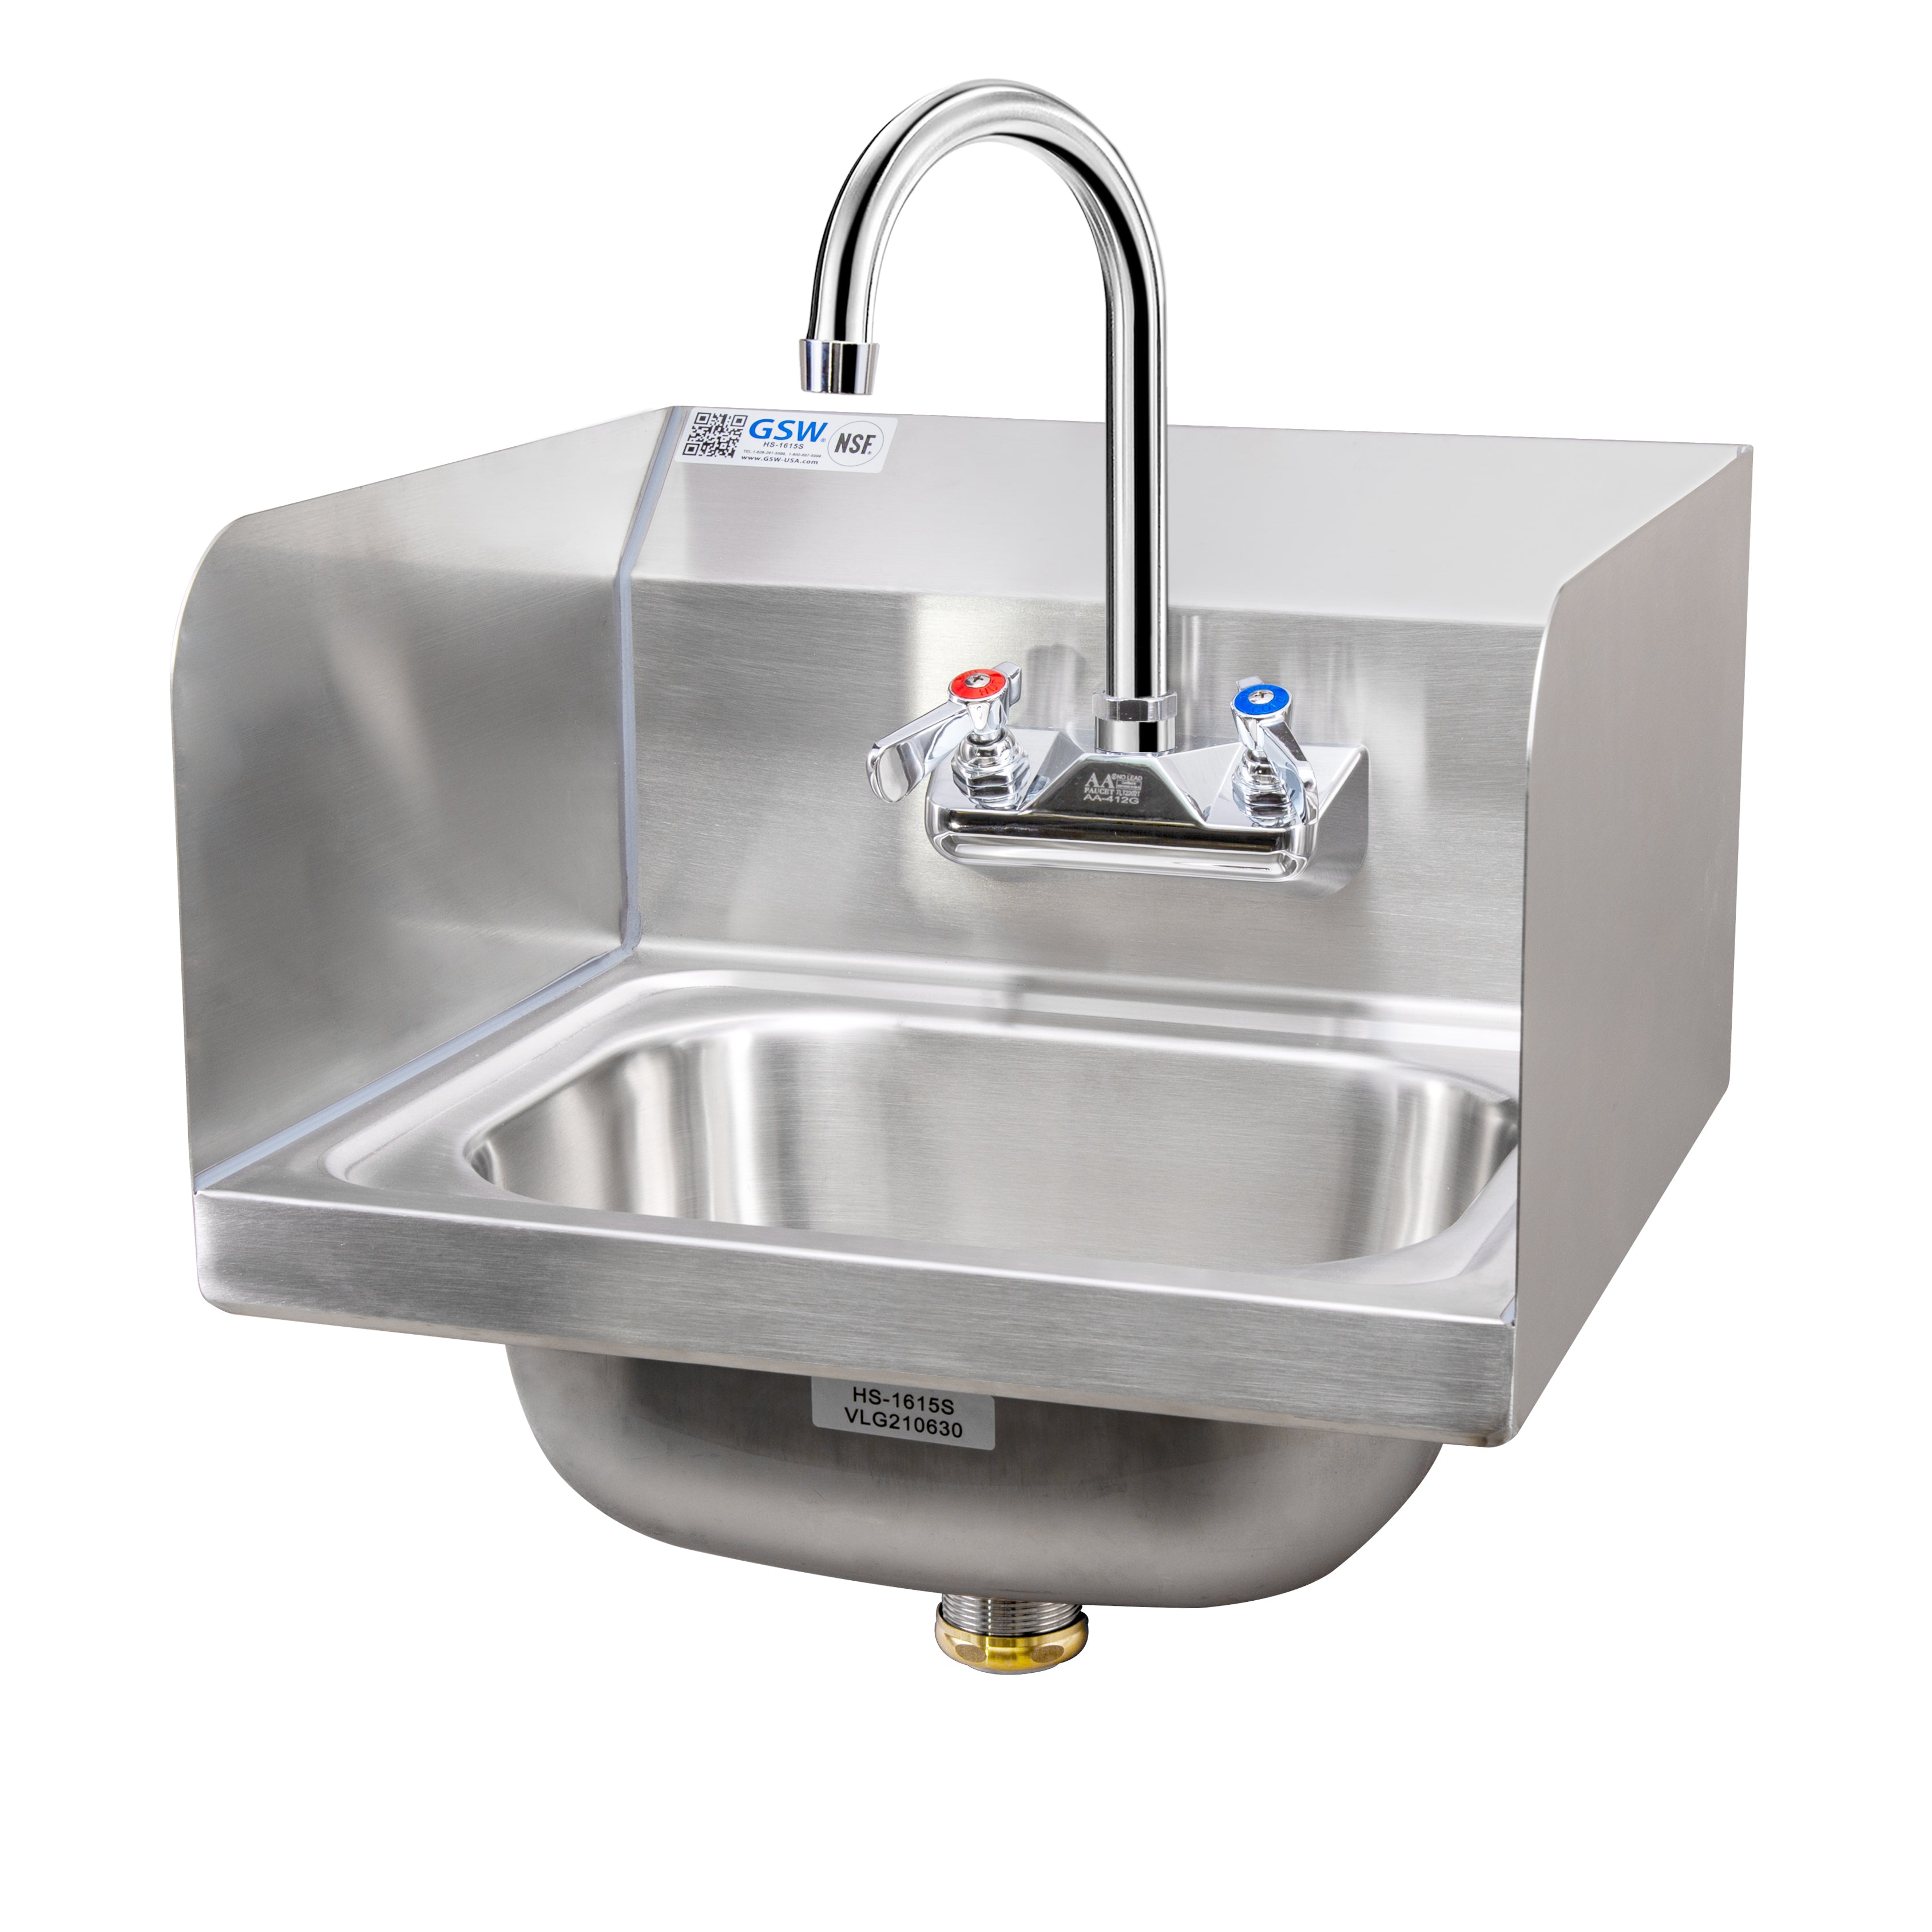 Splash Guard – Create Good Sinks